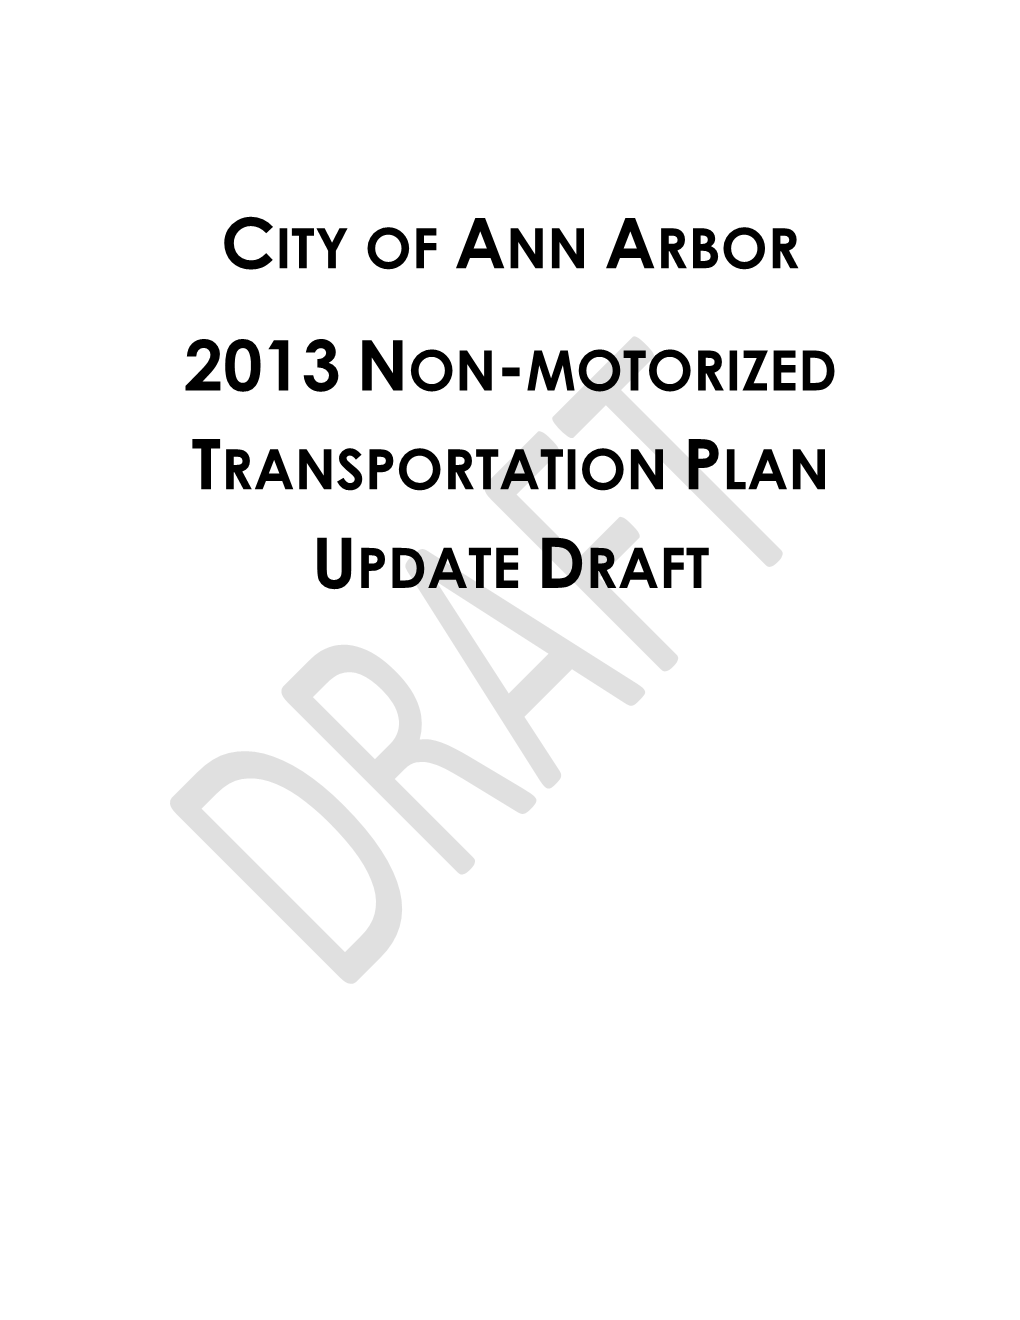 Pdf of Draft 2013 Non-Motorized Transportation Plan Update